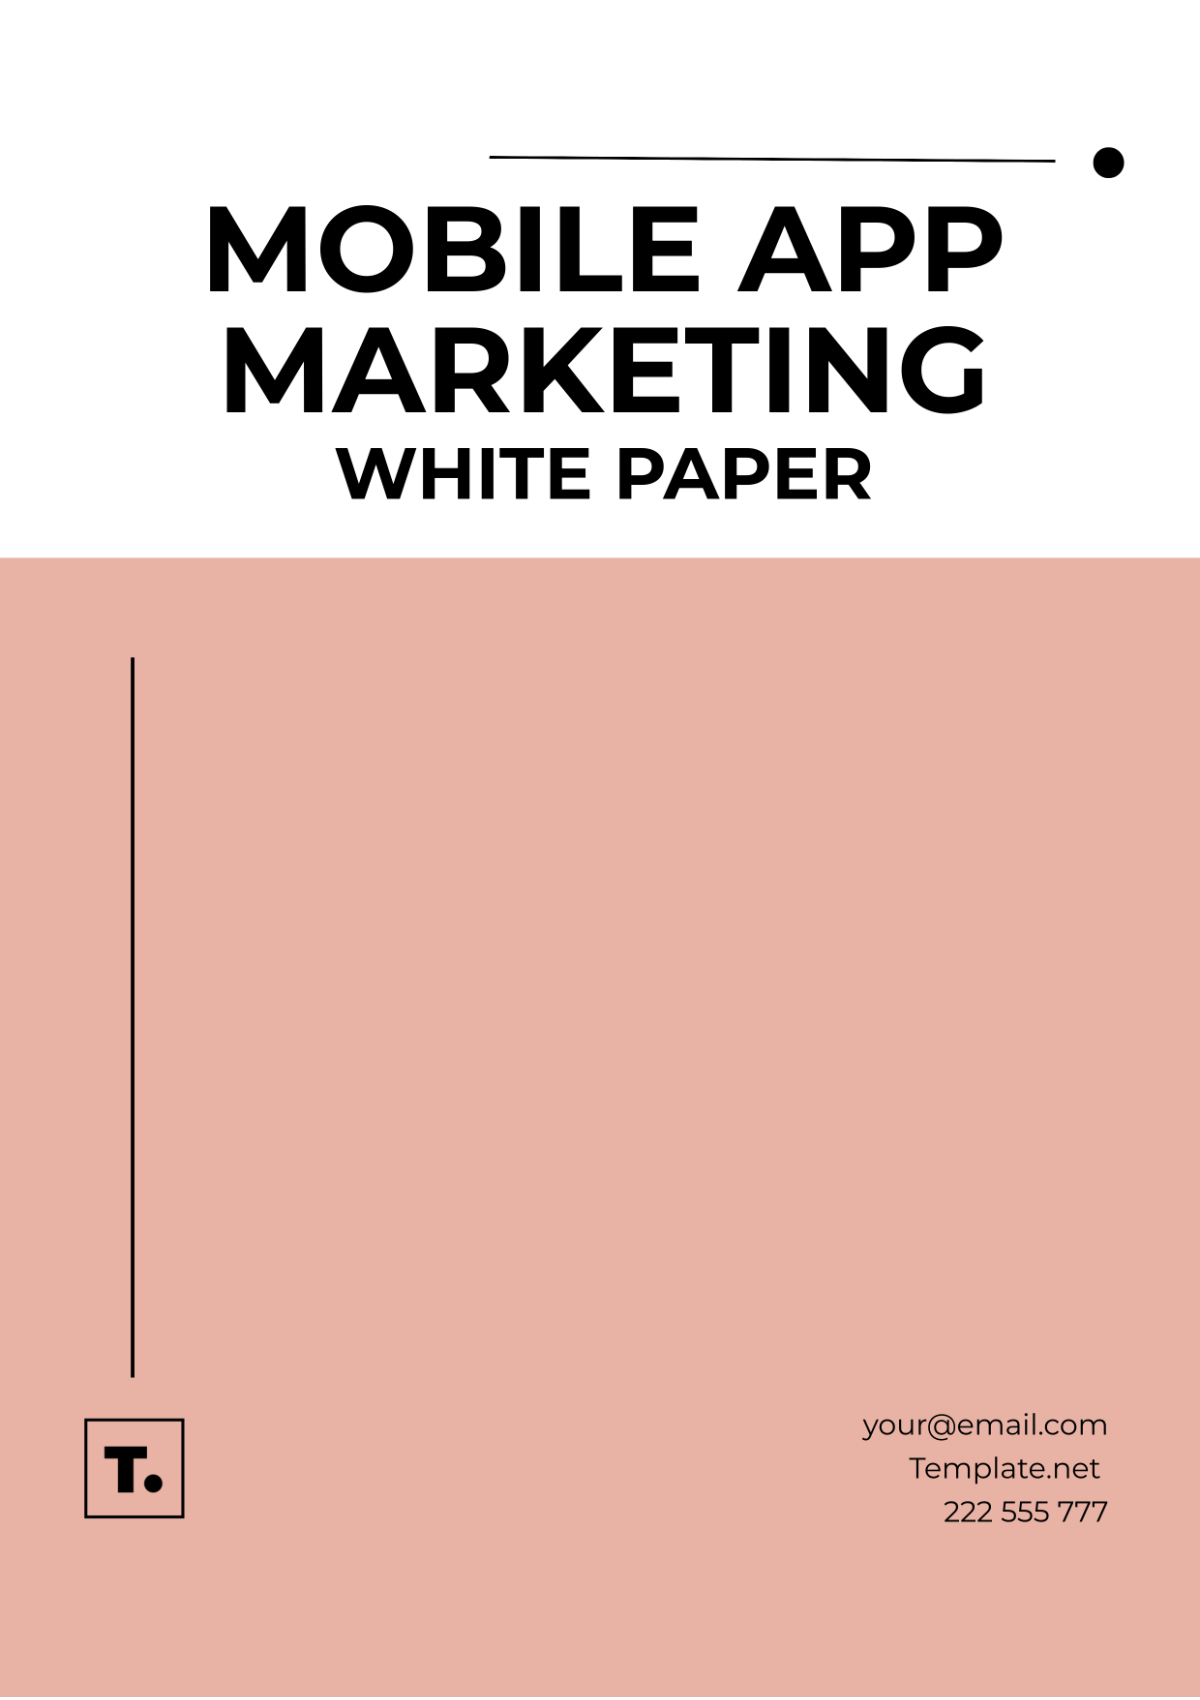 Mobile App Marketing White Paper Template